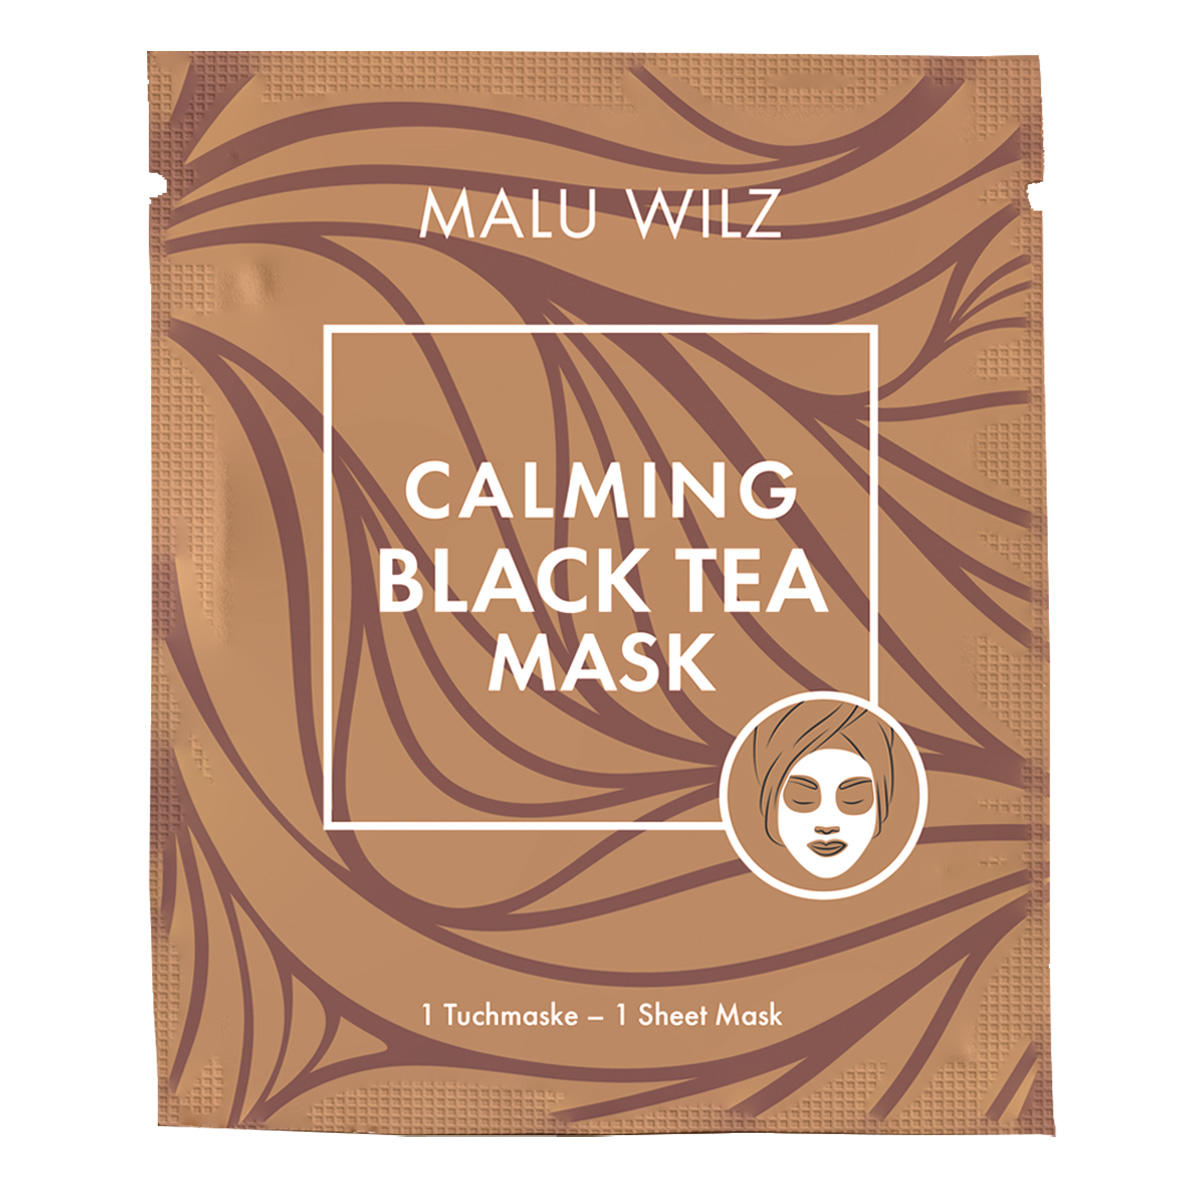 Malu Wilz Calming Black Tea Mask 1 Stück - 1